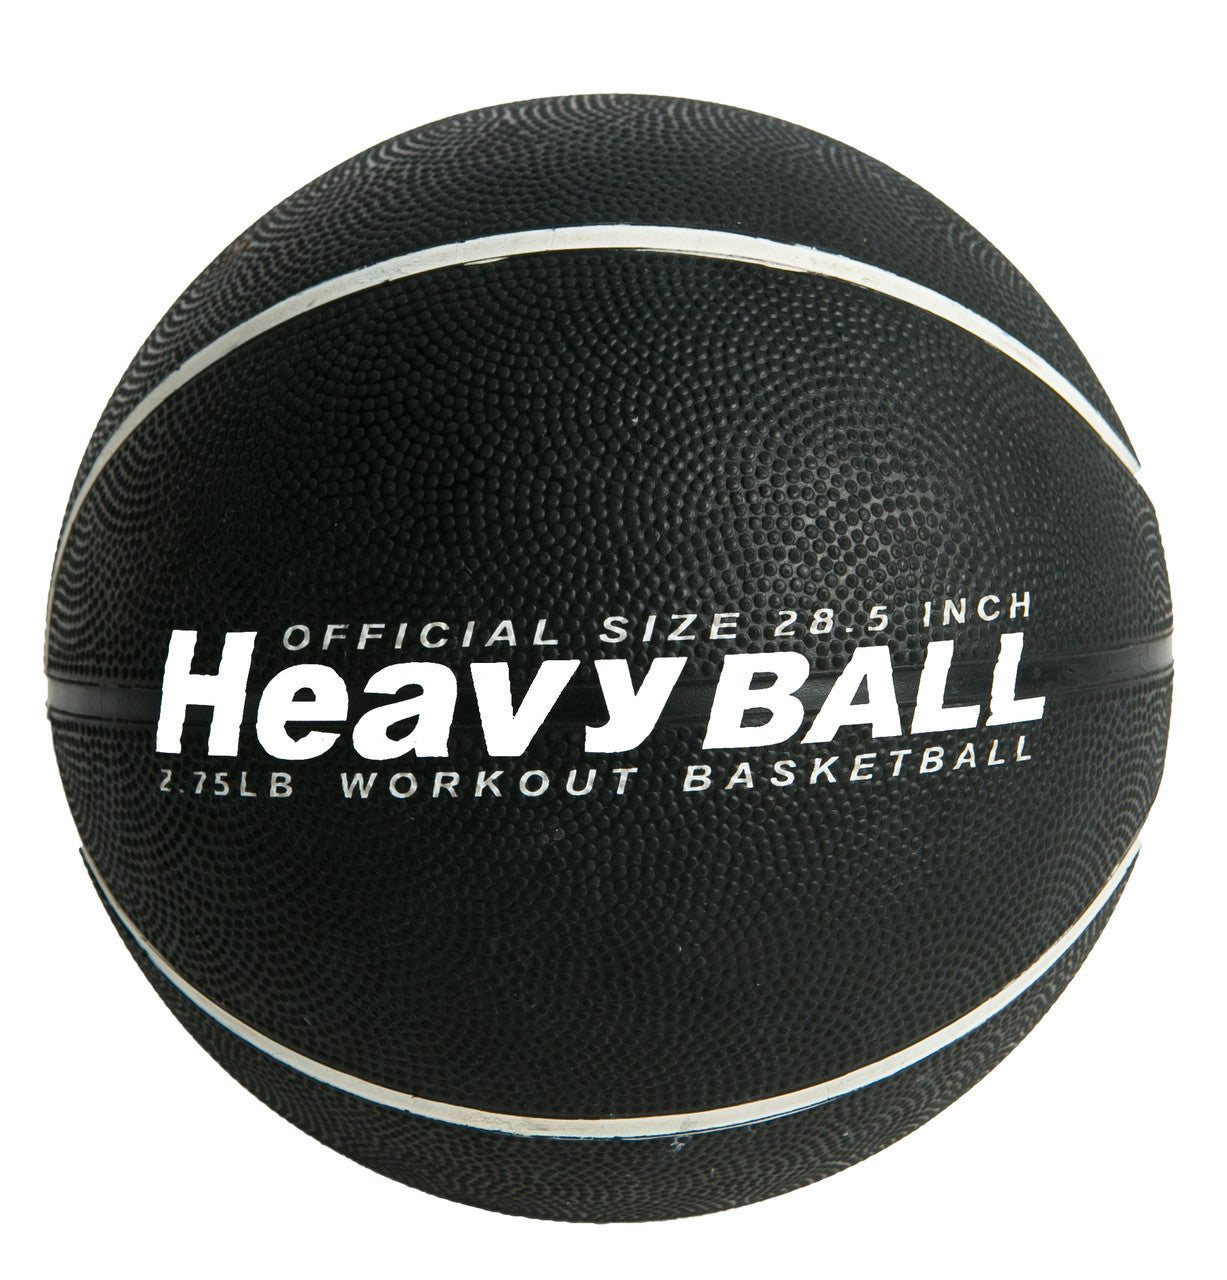 Heavy basketball for training.